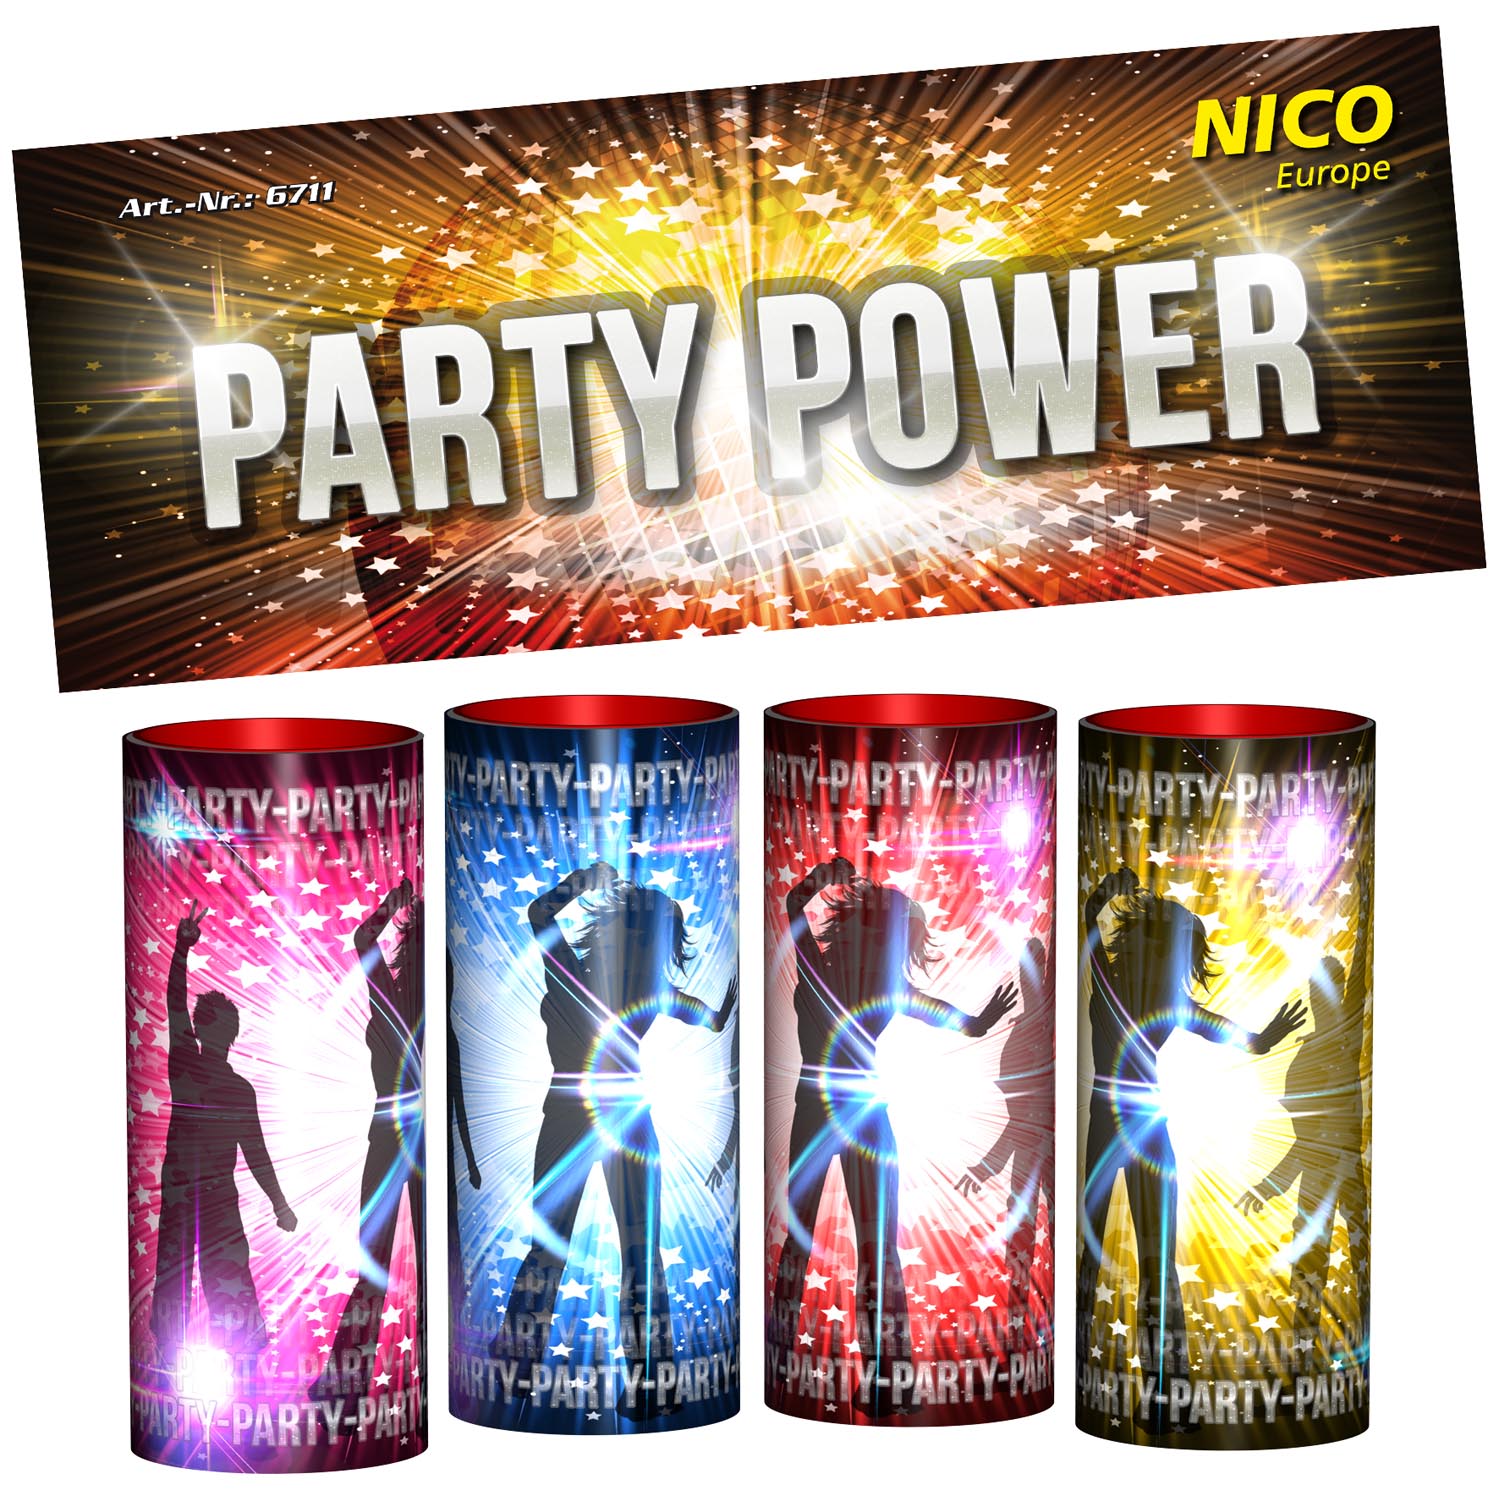 Party Power, 4er-Btl.